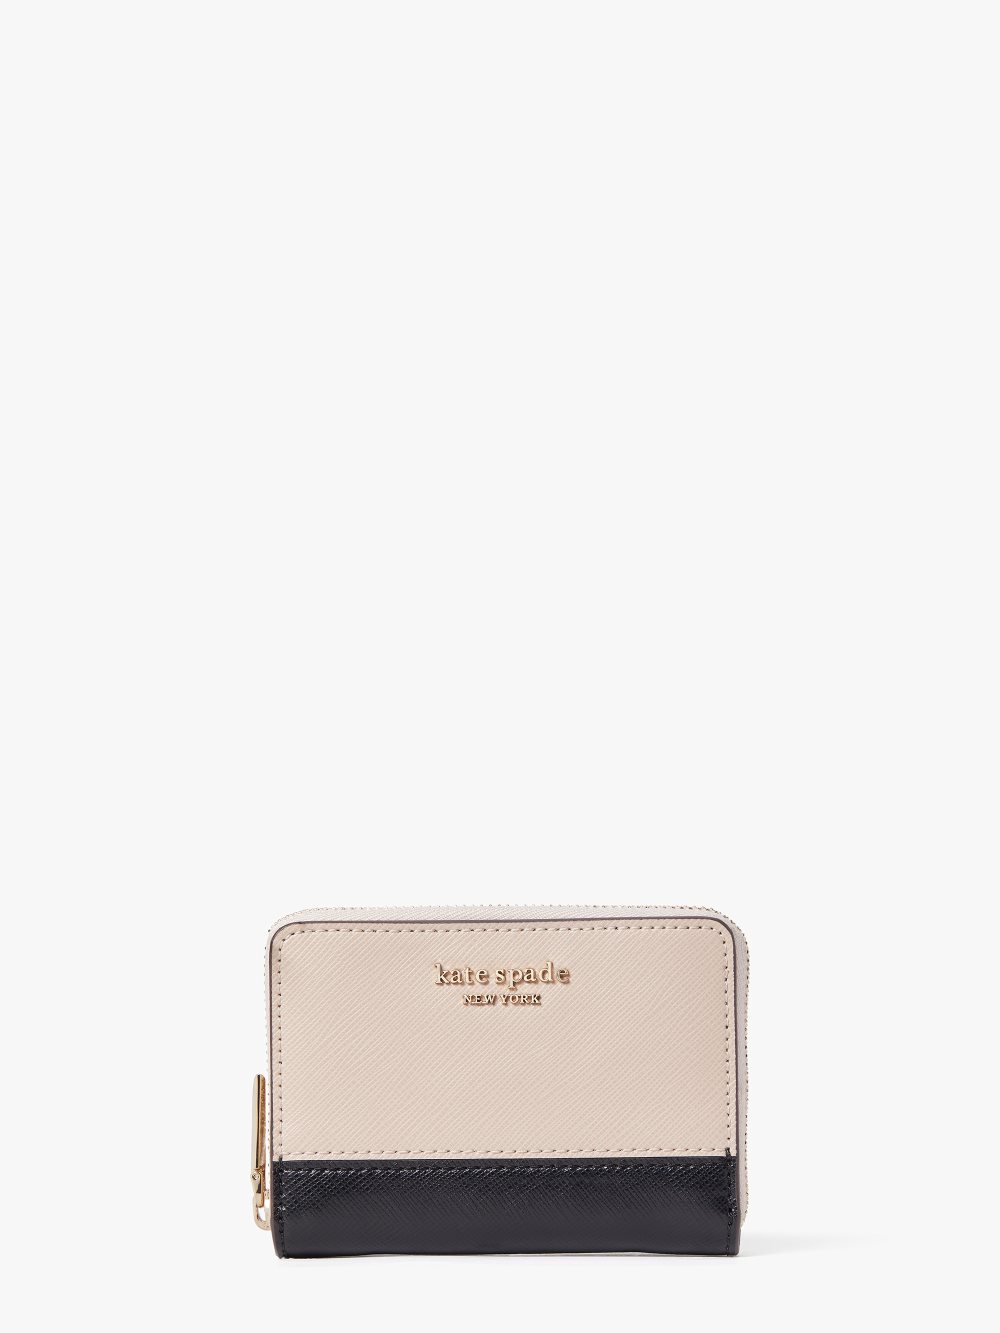 Women's warm beige/black spencer zip cardholder | Kate Spade